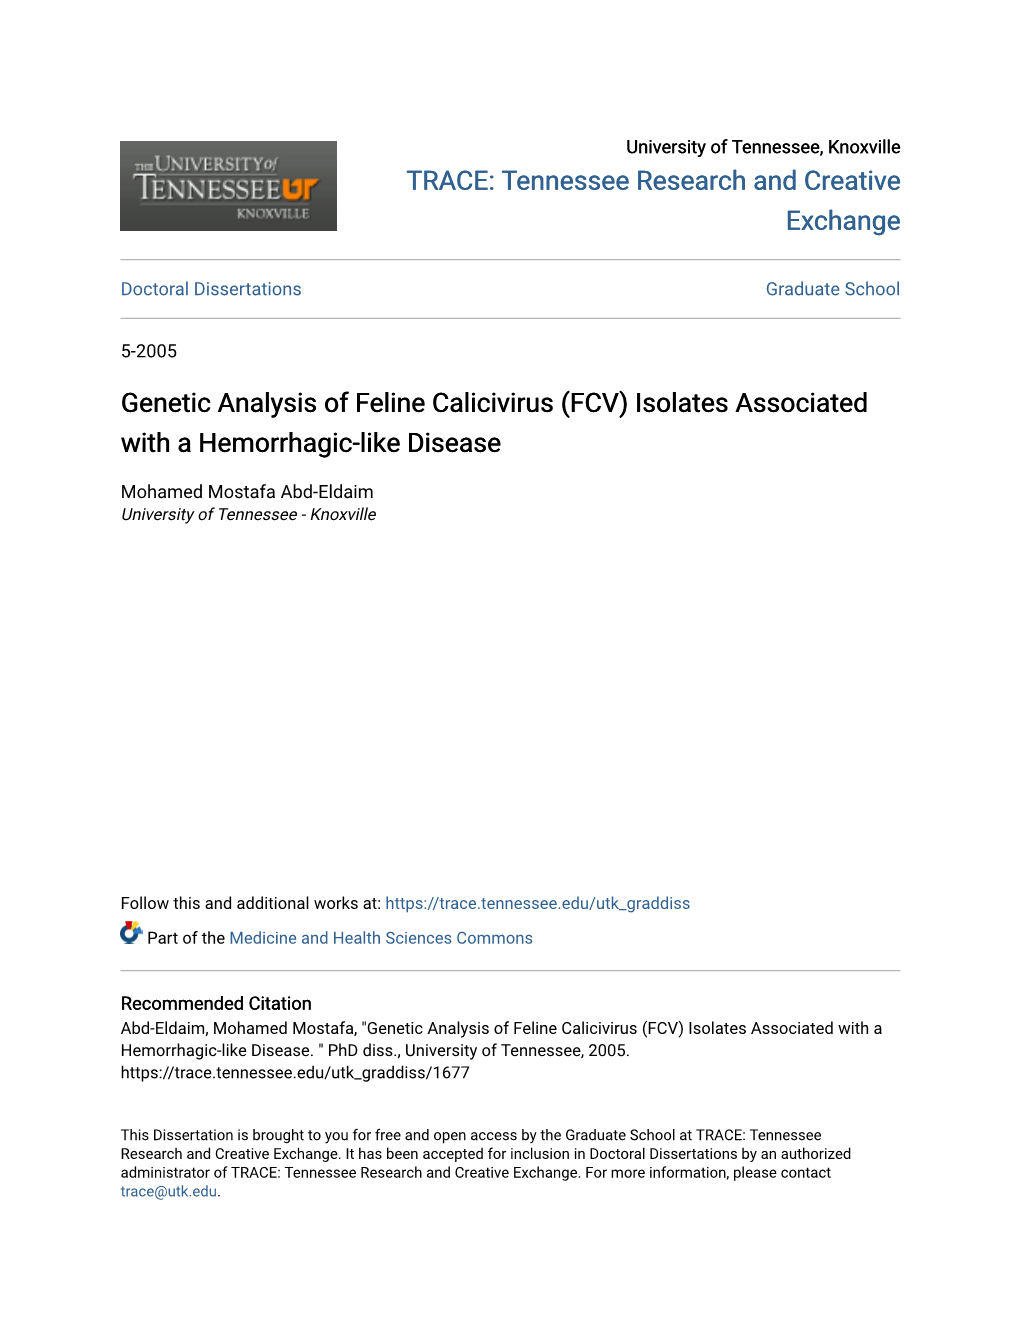 Genetic Analysis of Feline Calicivirus (FCV) Isolates Associated with a Hemorrhagic-Like Disease